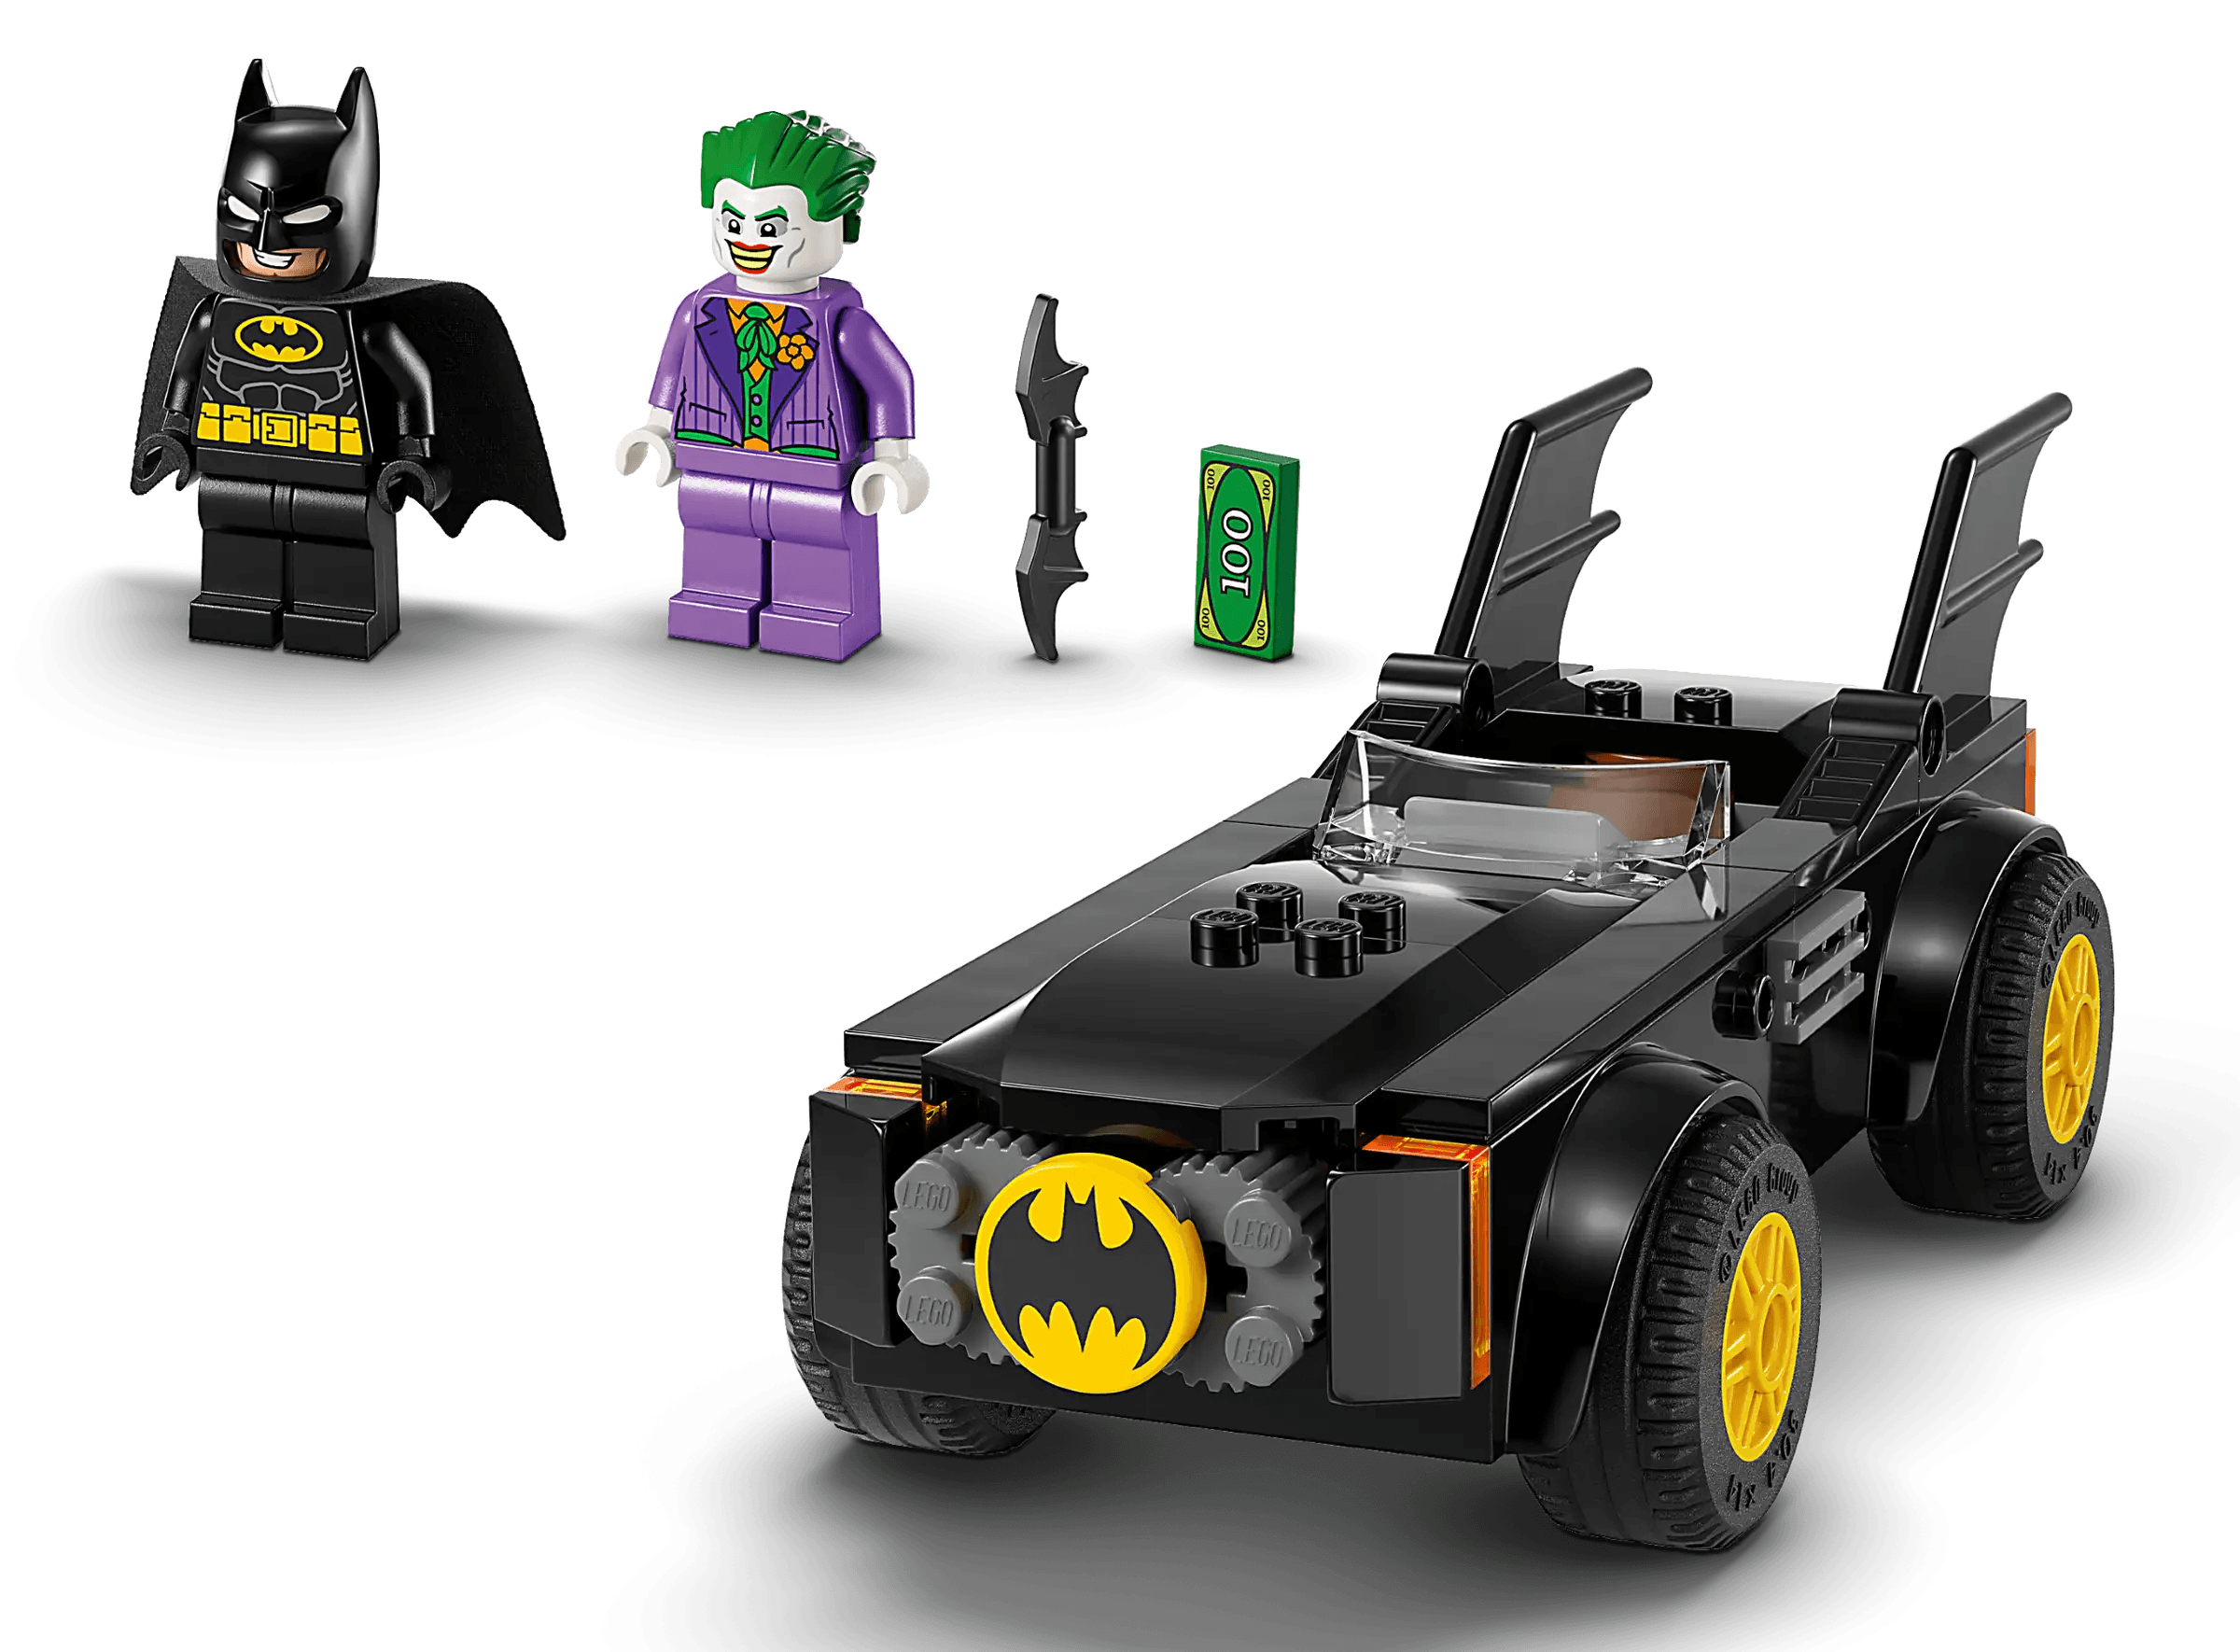 LEGO BATMAN Batmobile™ Pursuit: Batman™ vs. The Joker™ - Mari Kali Stores Cyprus